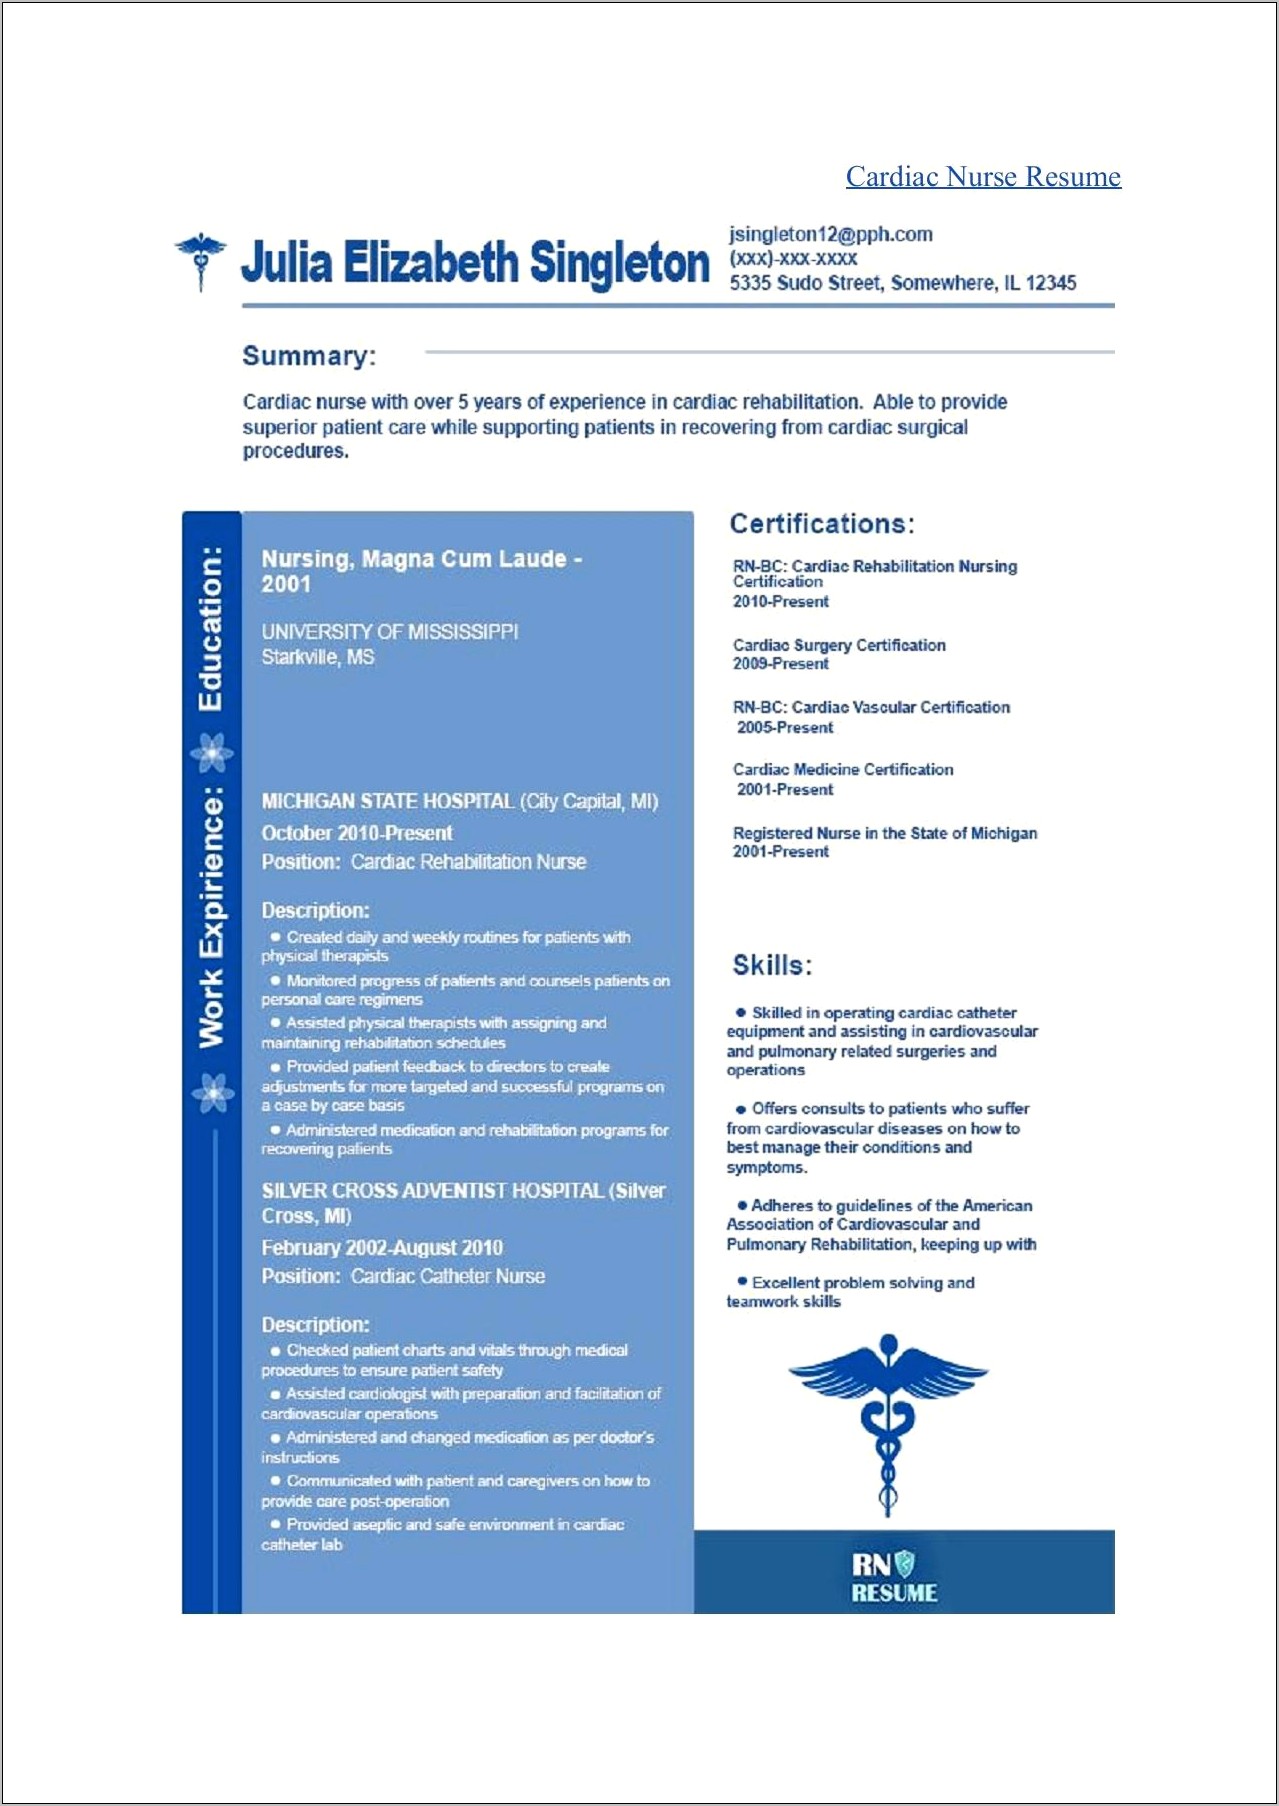 Sample Nursing Resume For Cardiac Cath Lab